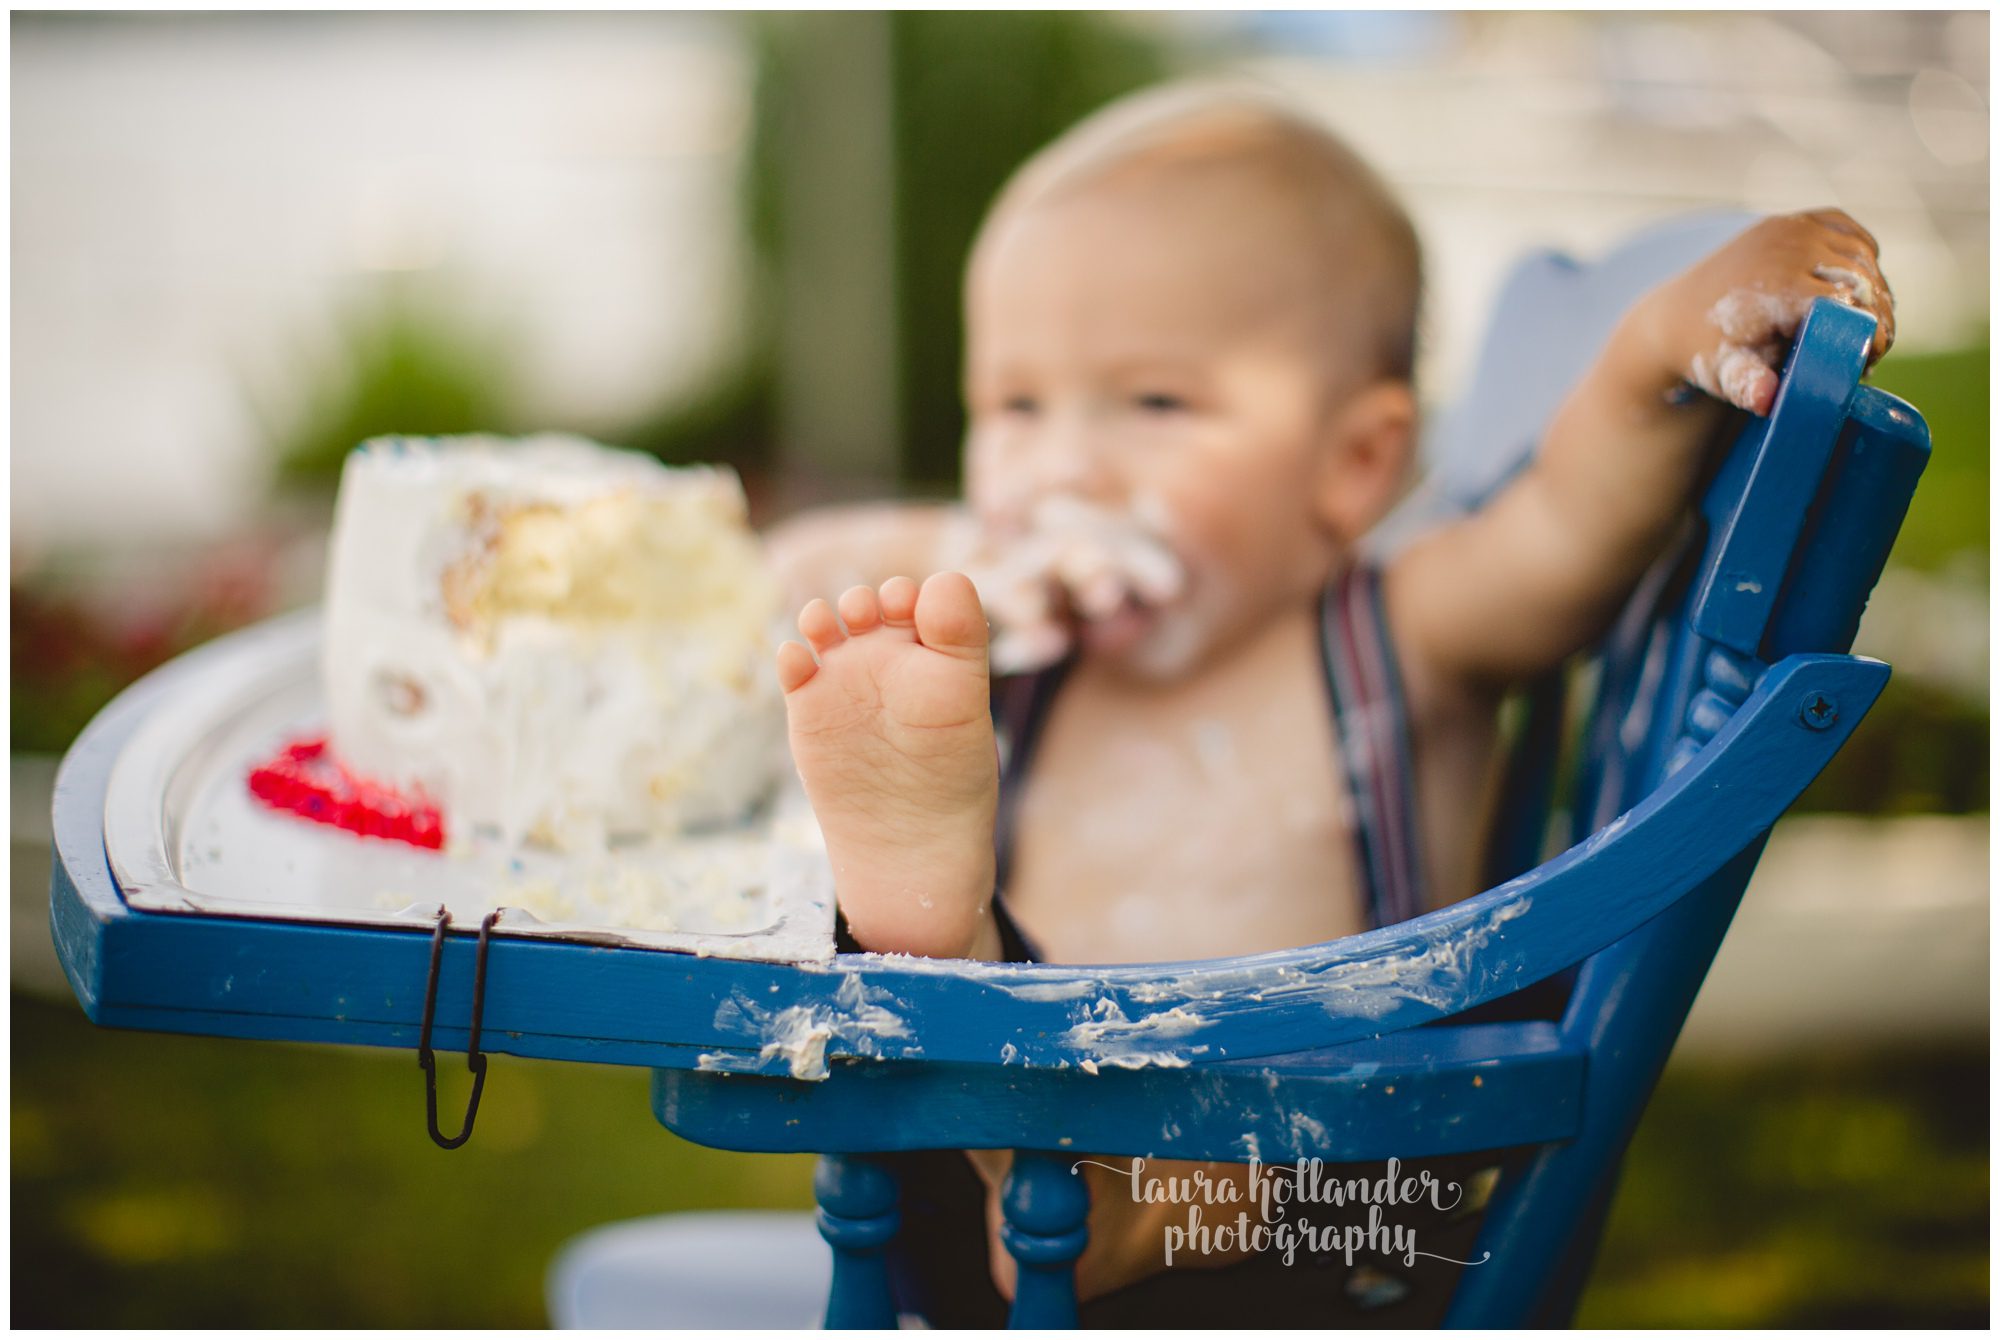 one year milestone, family of three, baby boy with smash cake, outdoor smash cake session